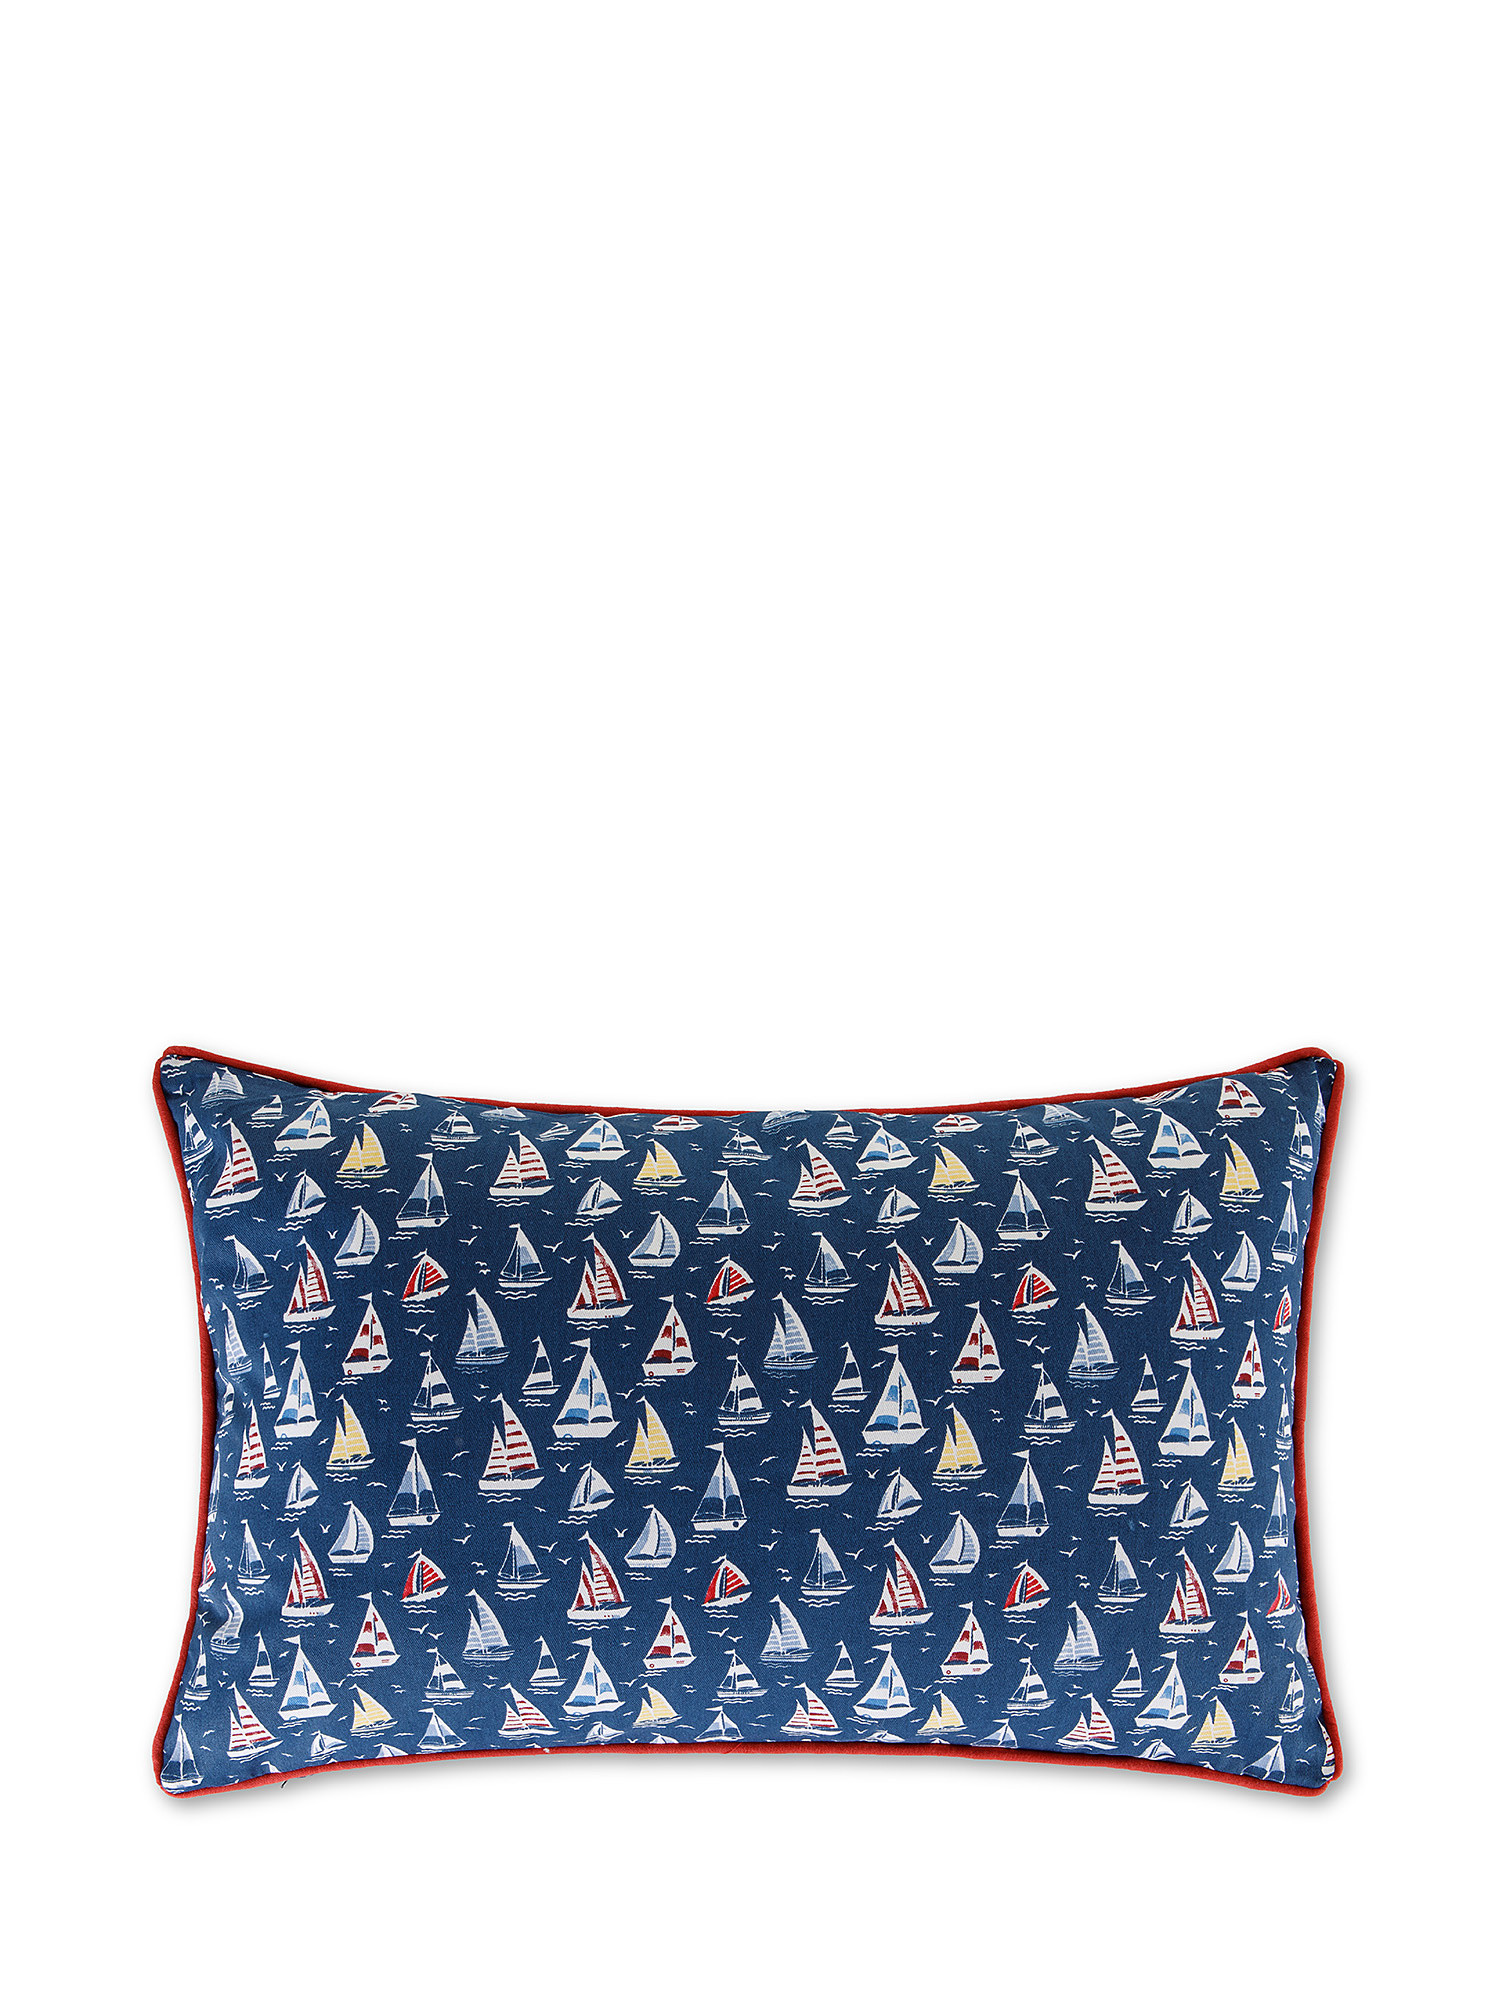 Sails print cushion 35x55cm, Multicolor, large image number 0